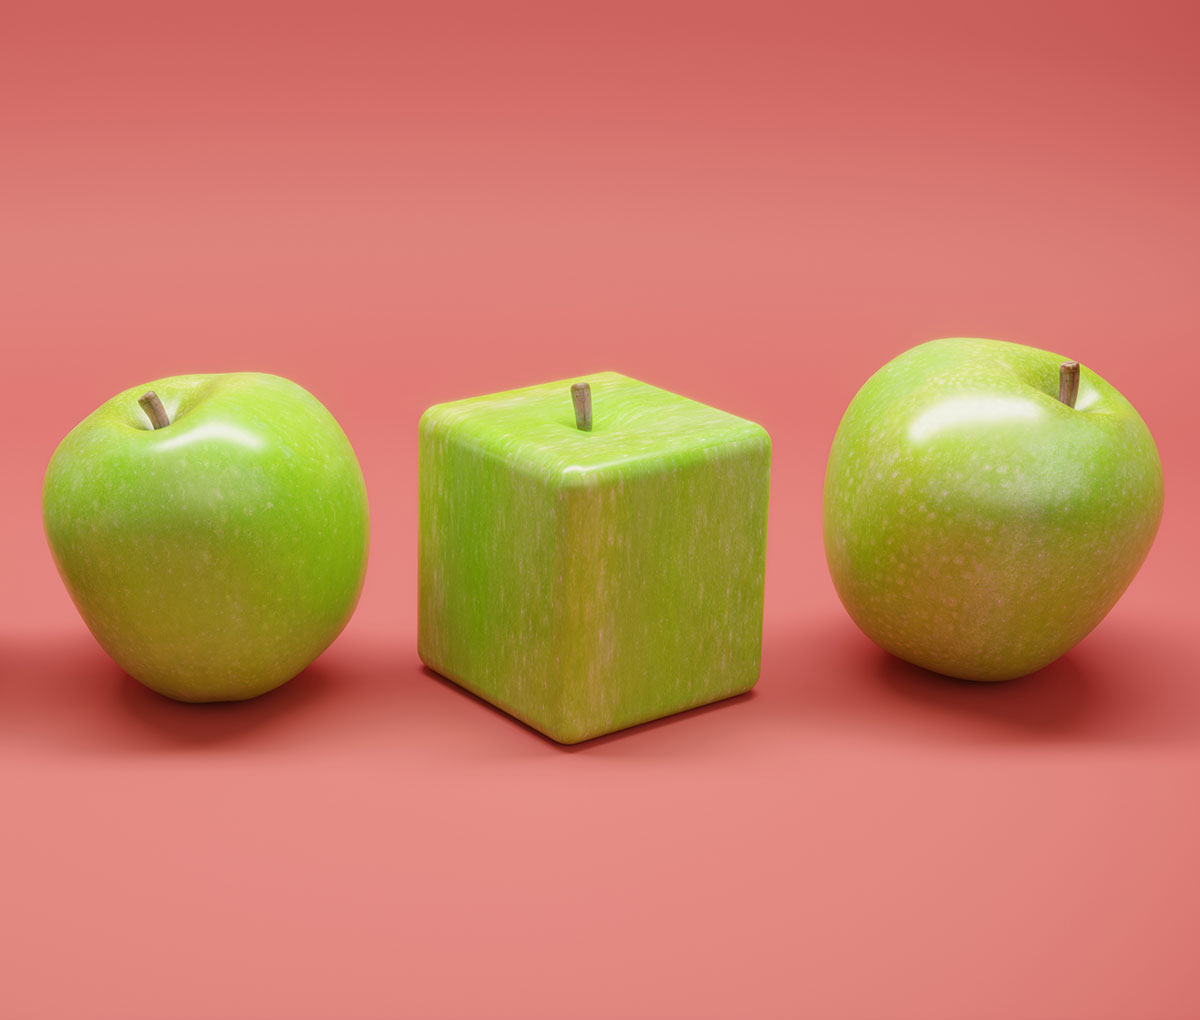 three green apples